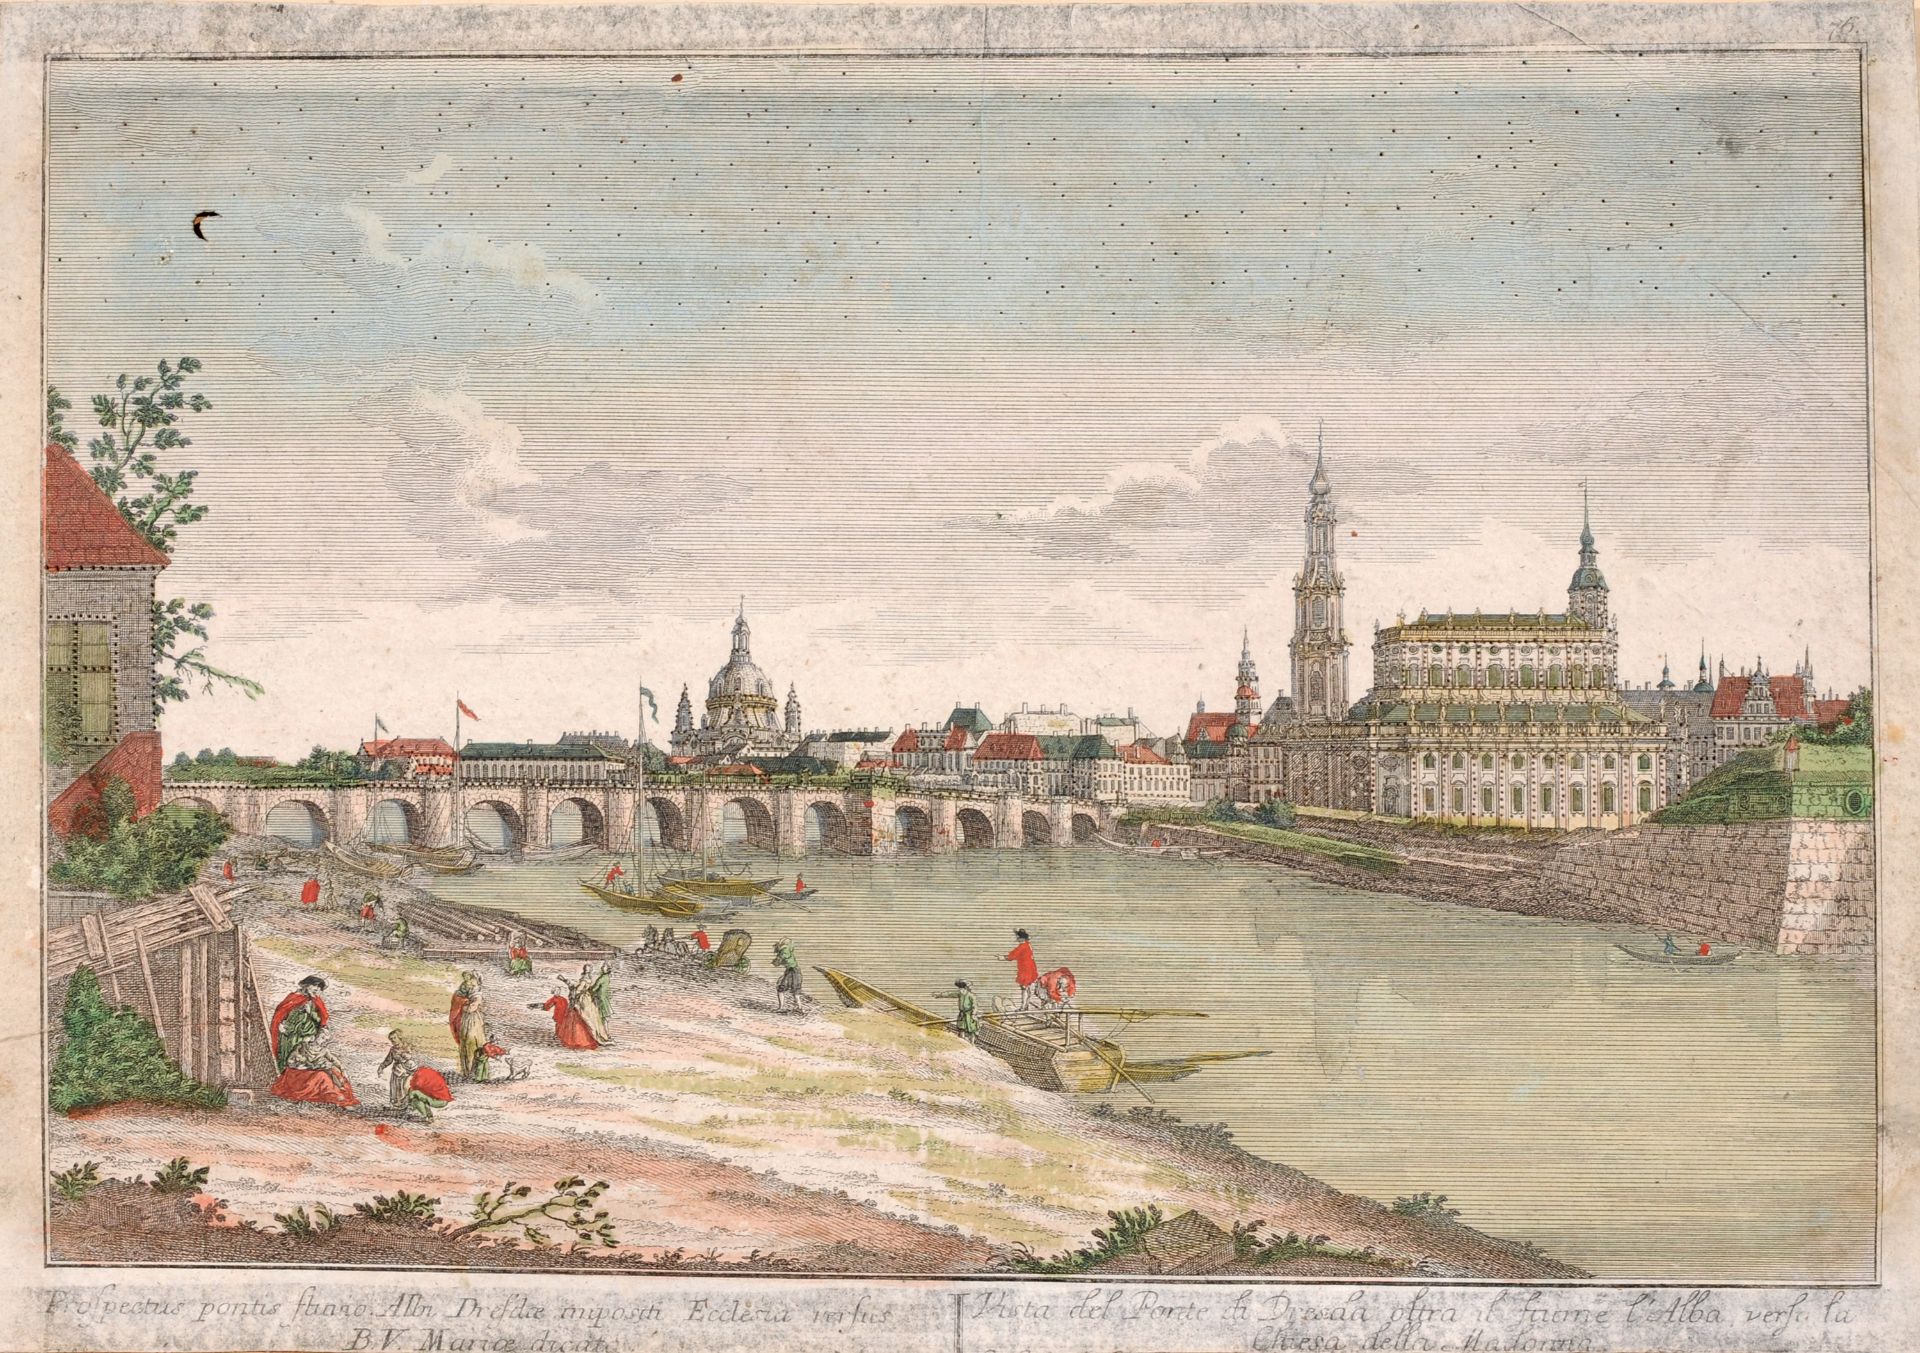 Georg Balthasar Probst "Prospectus pontis fluvio Albi Dresda ". 1770.